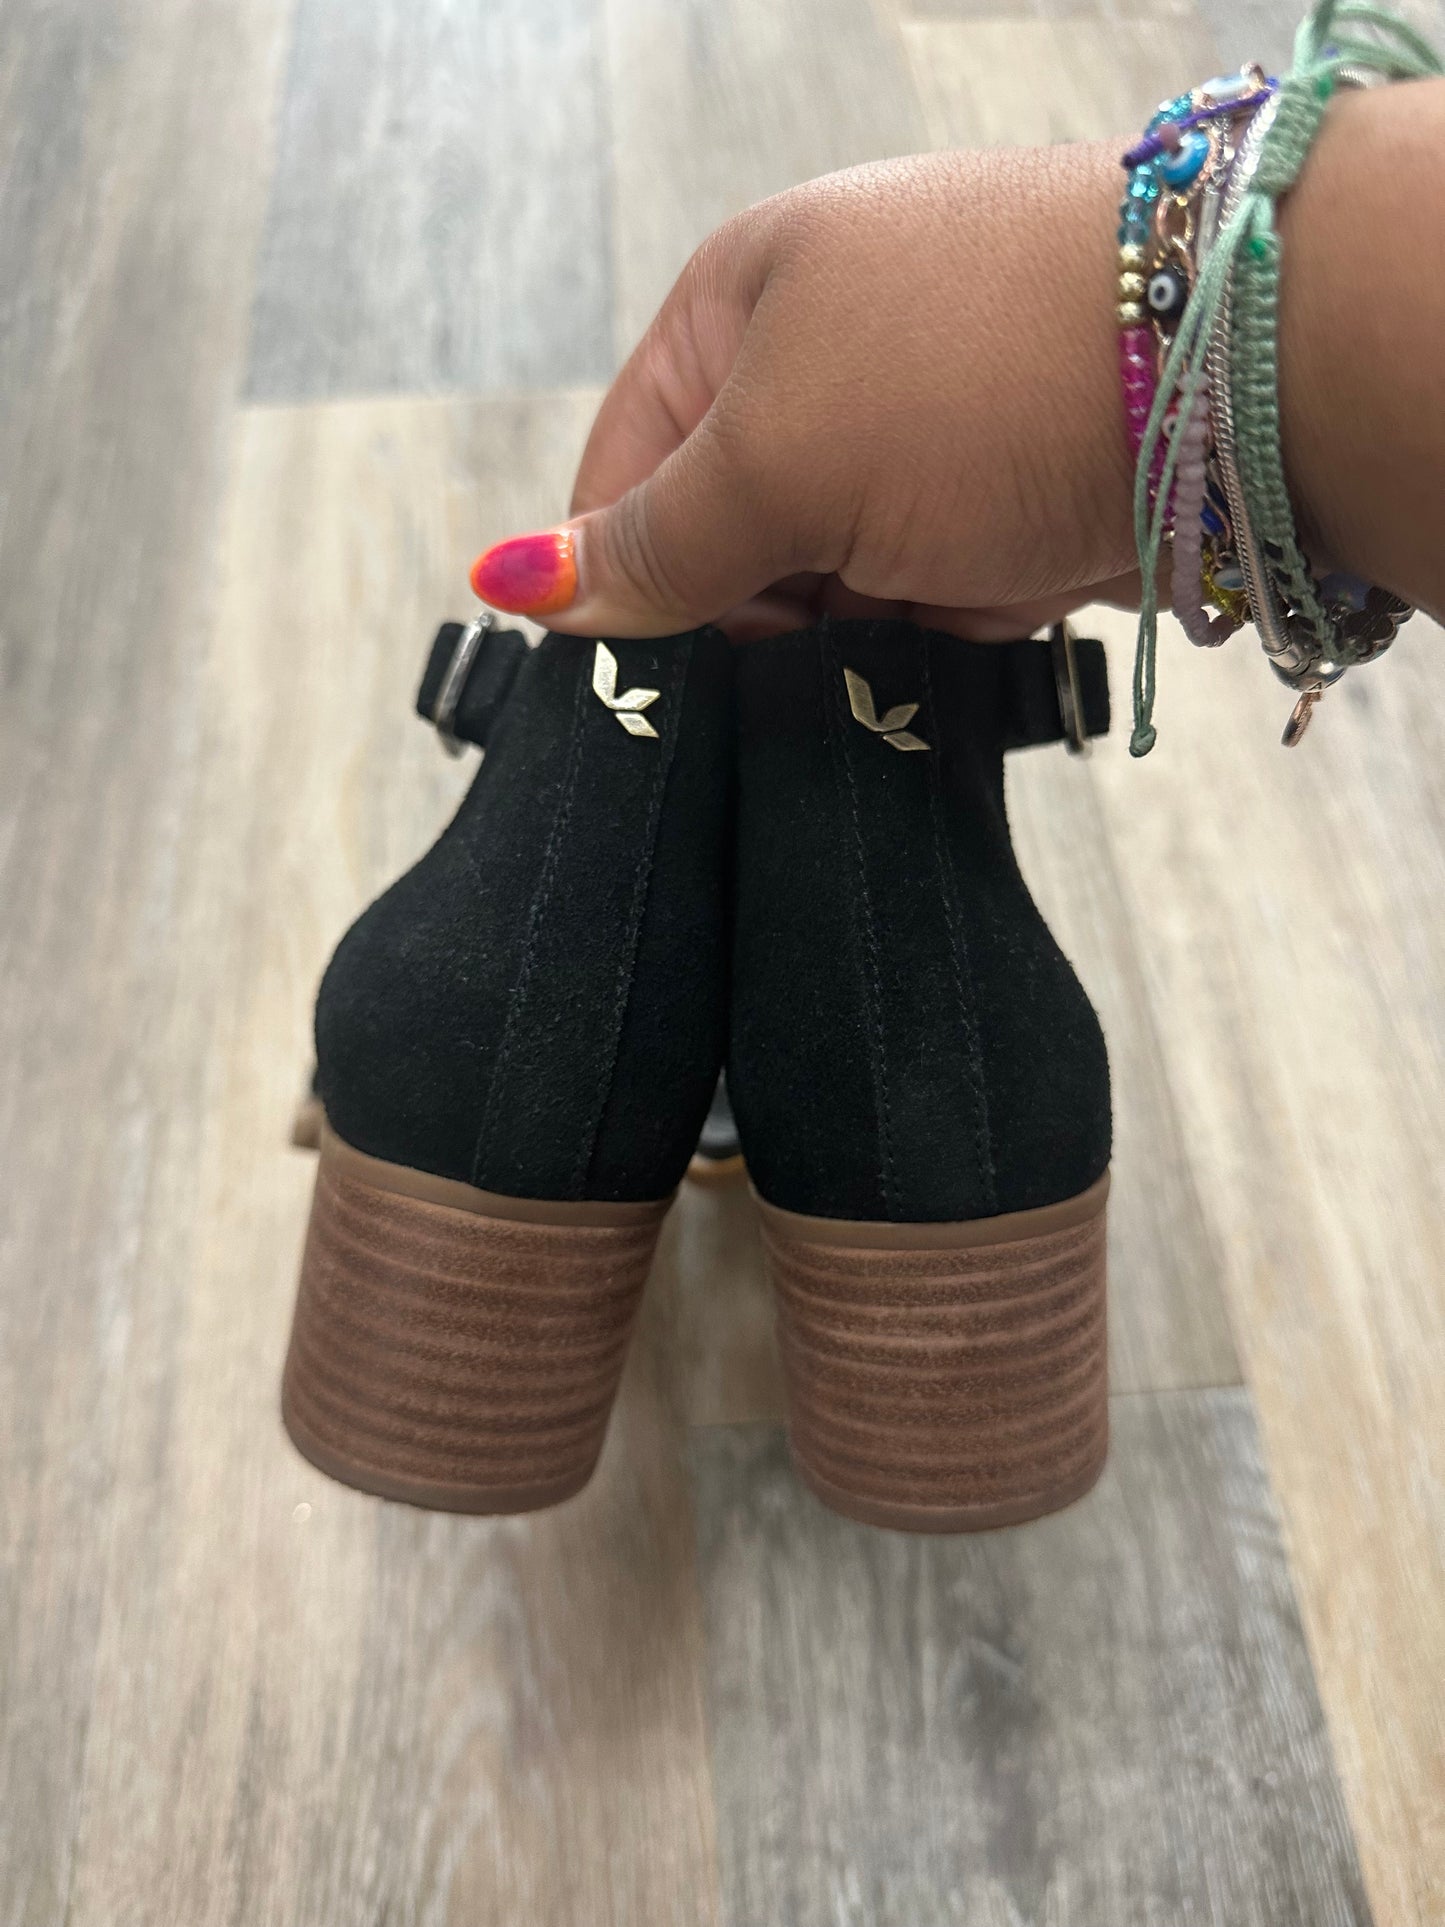 Sandals Heels Block By Koolaburra By Ugg  Size: 5.5